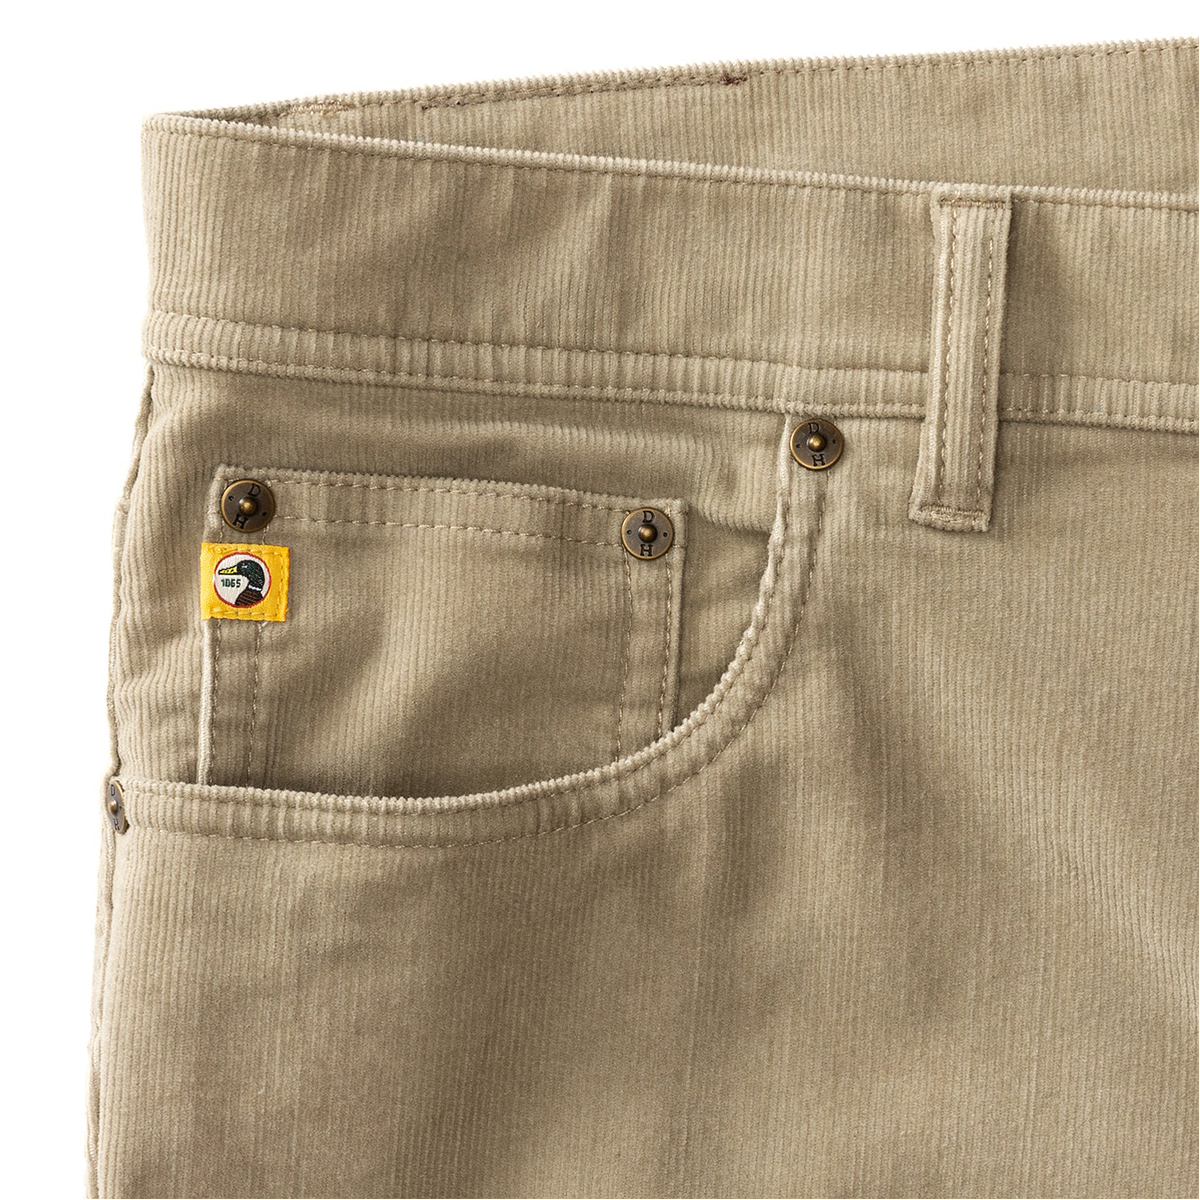 Holston Corduroy 5-Pocket Pant